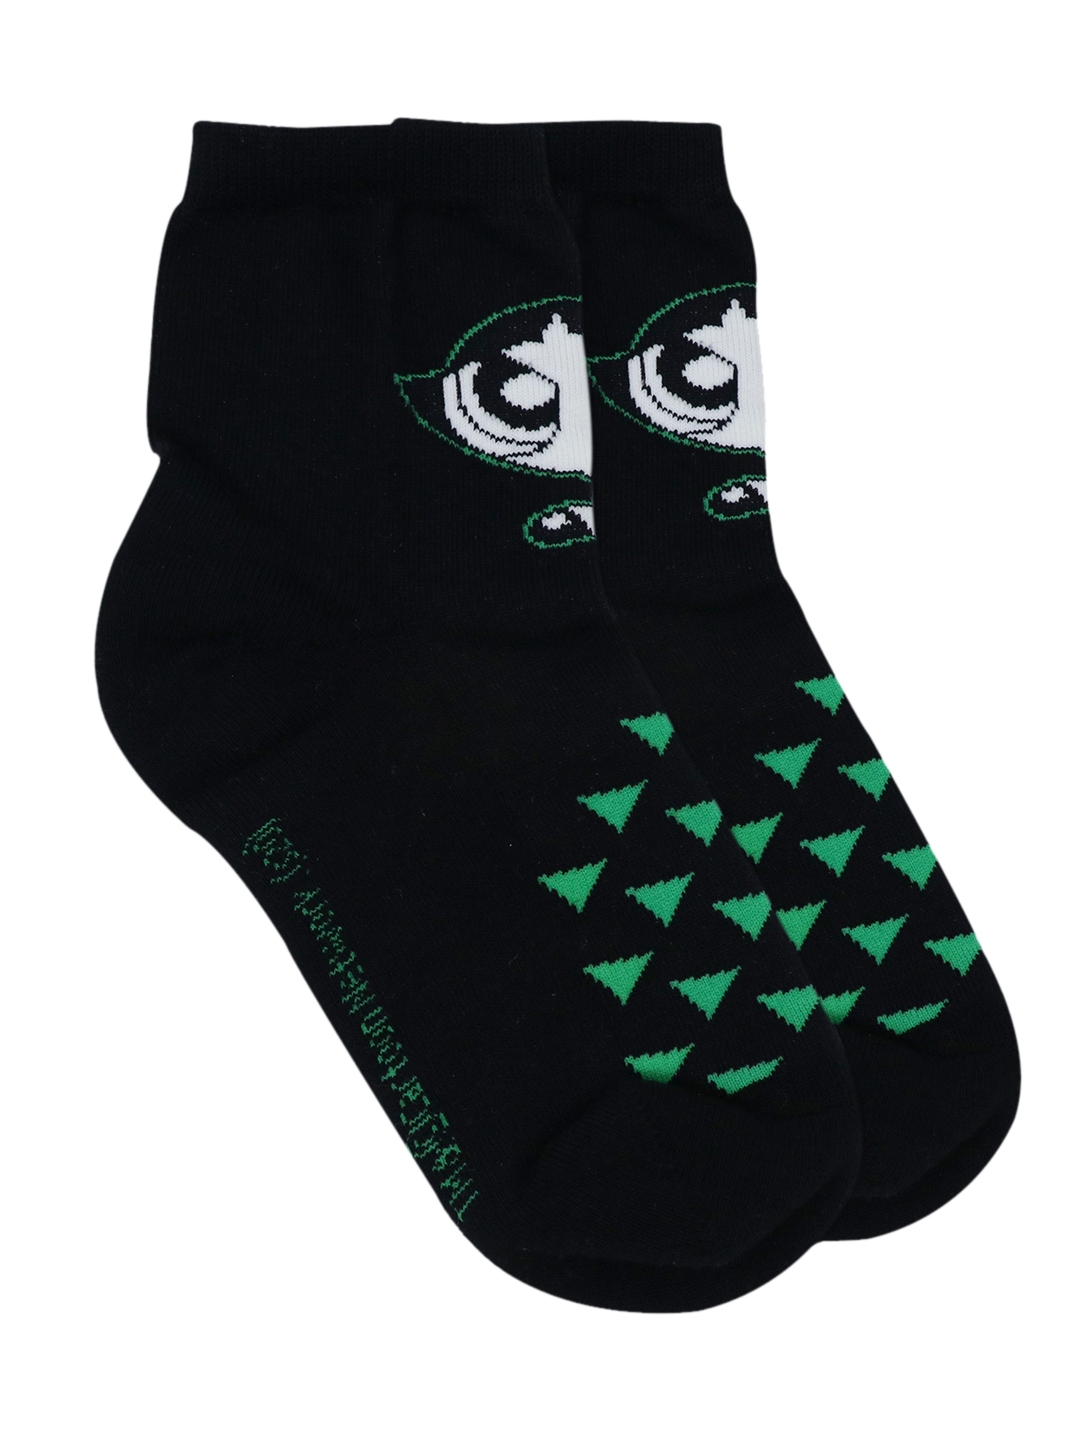 Buy Cartoon Network Women Black & Green Patterned Ankle Length Socks ...